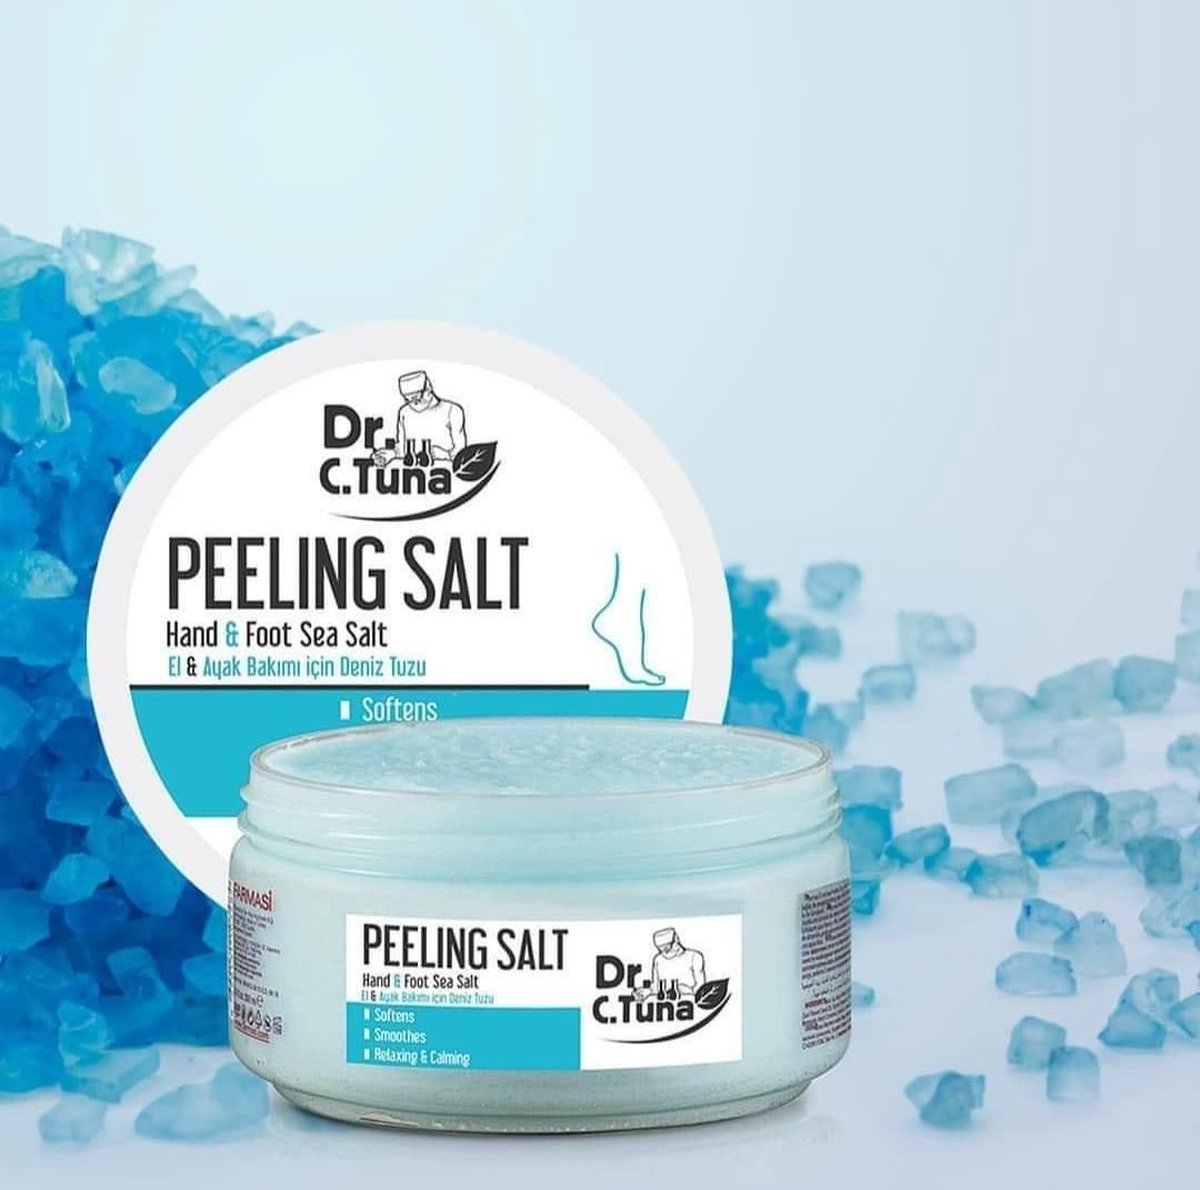 PARTAGEZ CE PRODUIT Farmasi Dr C.Tuna - Peeling Salt Mains & Pieds 250 ml